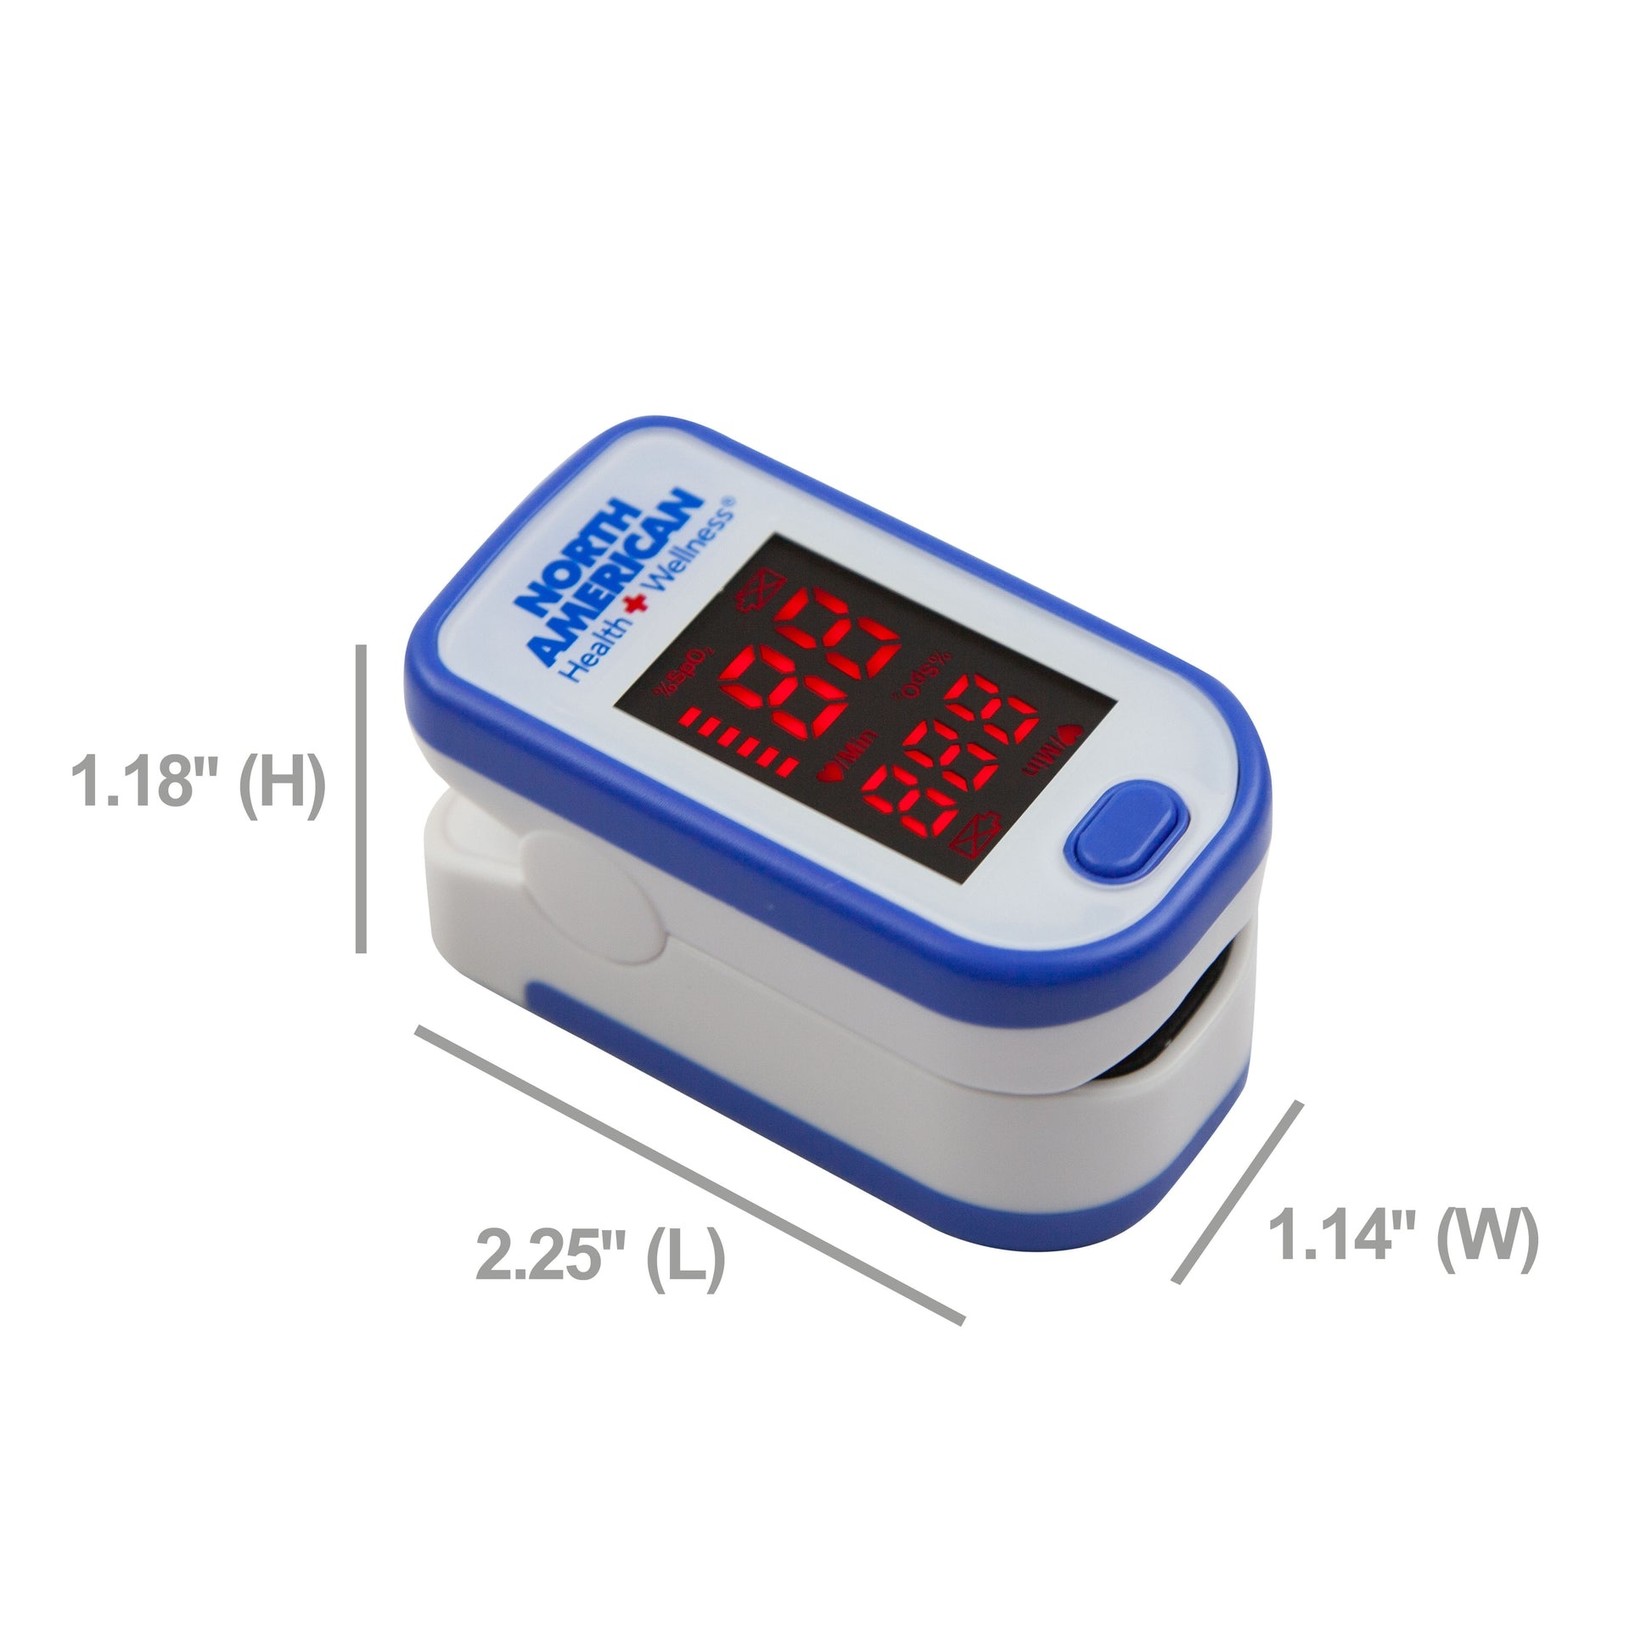 North American Wellness+ Oximeter & Pulse Meter